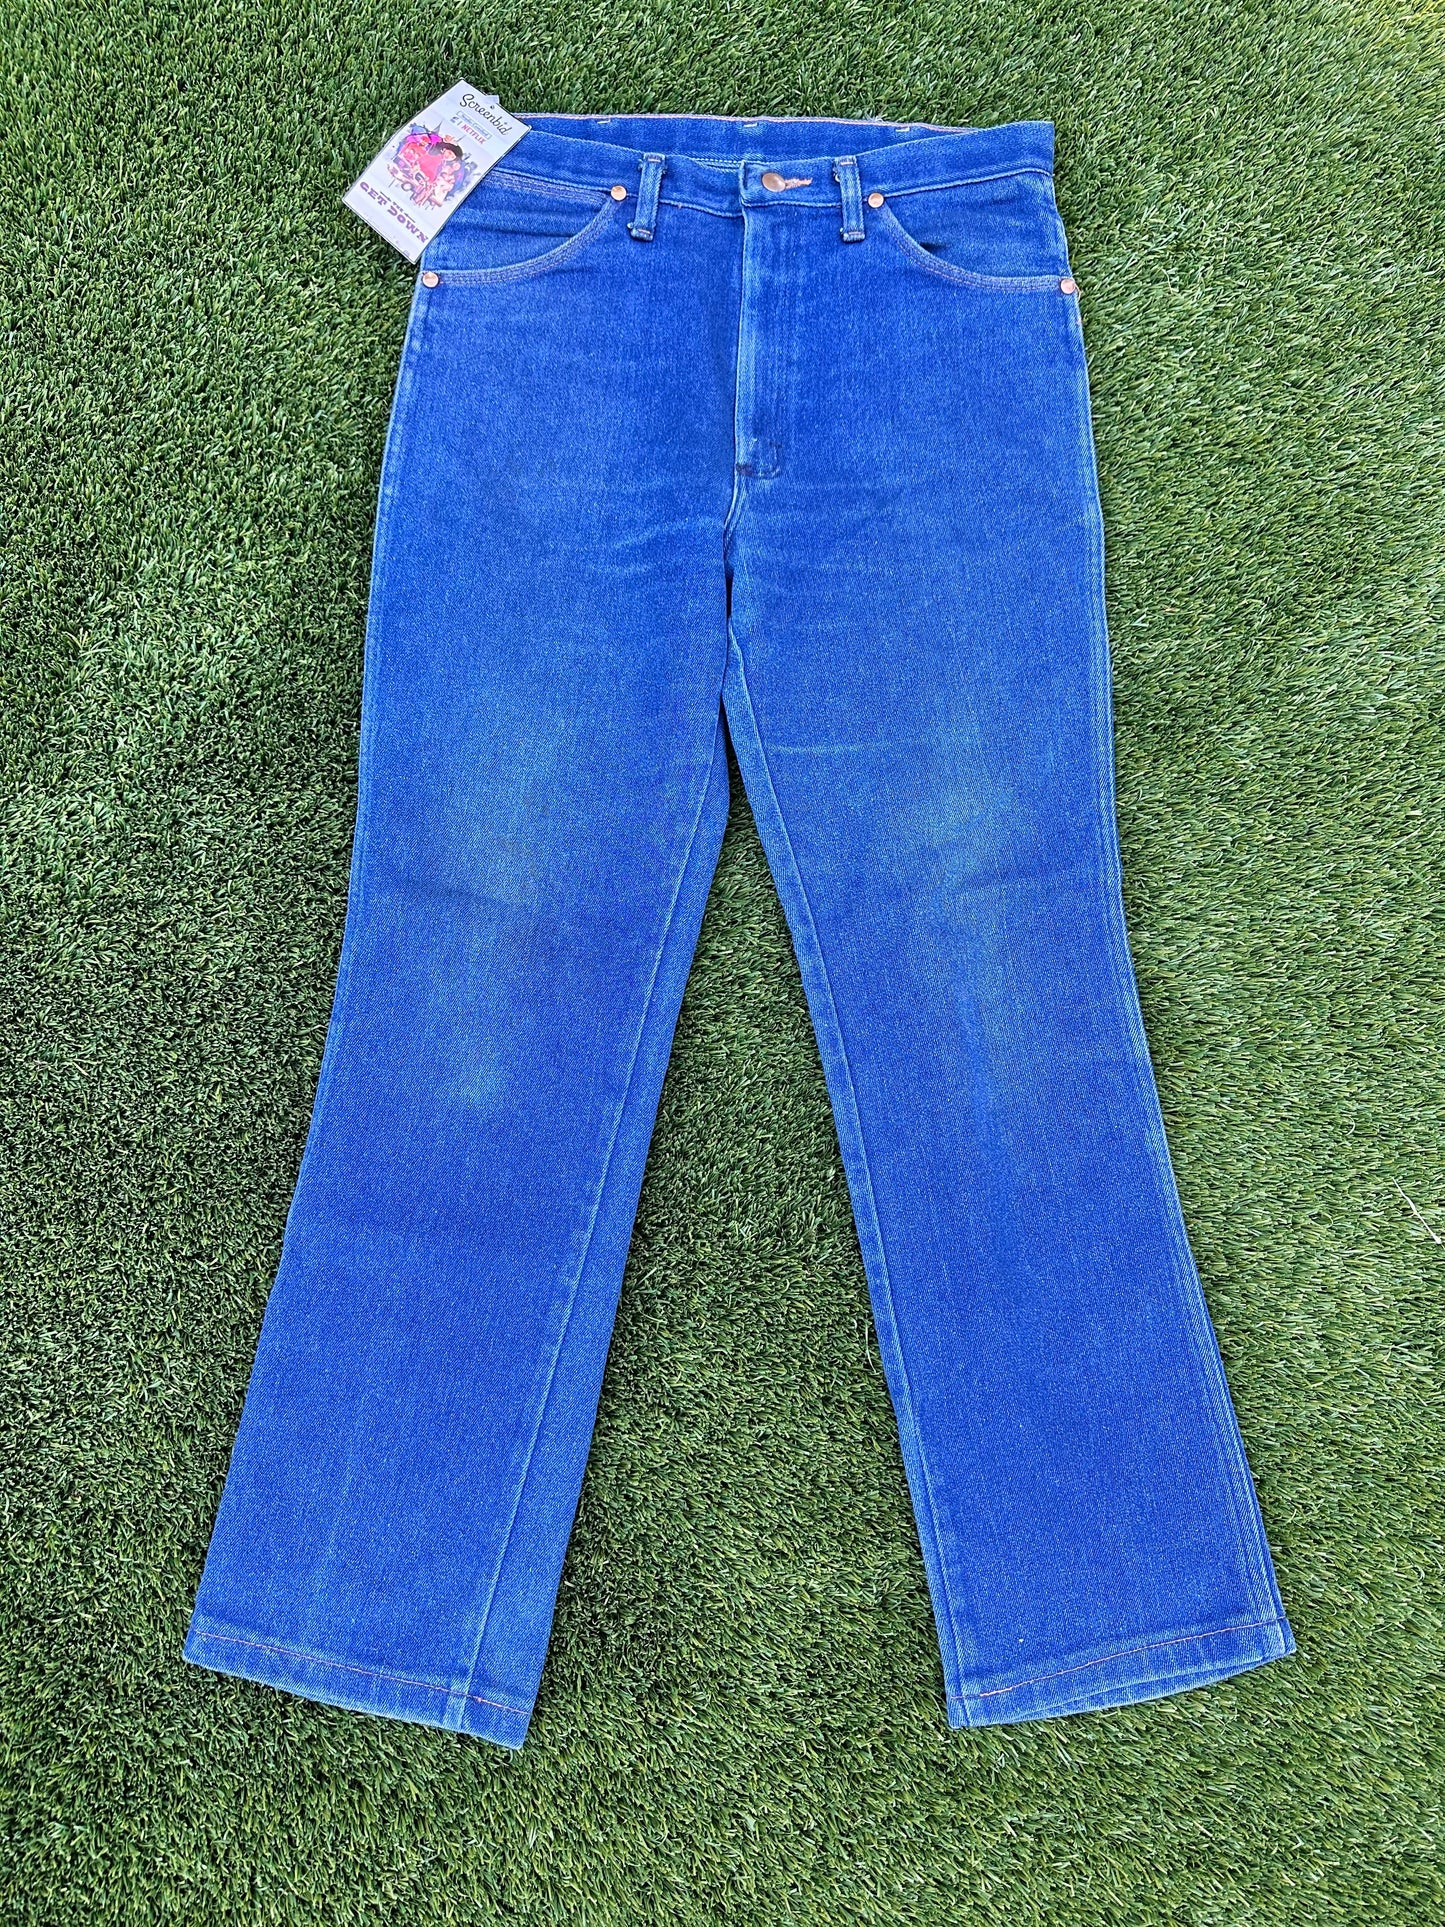 THE GET DOWN: Shaolin’s Wrangler Vintage Blue Denim Jeans (32/34)